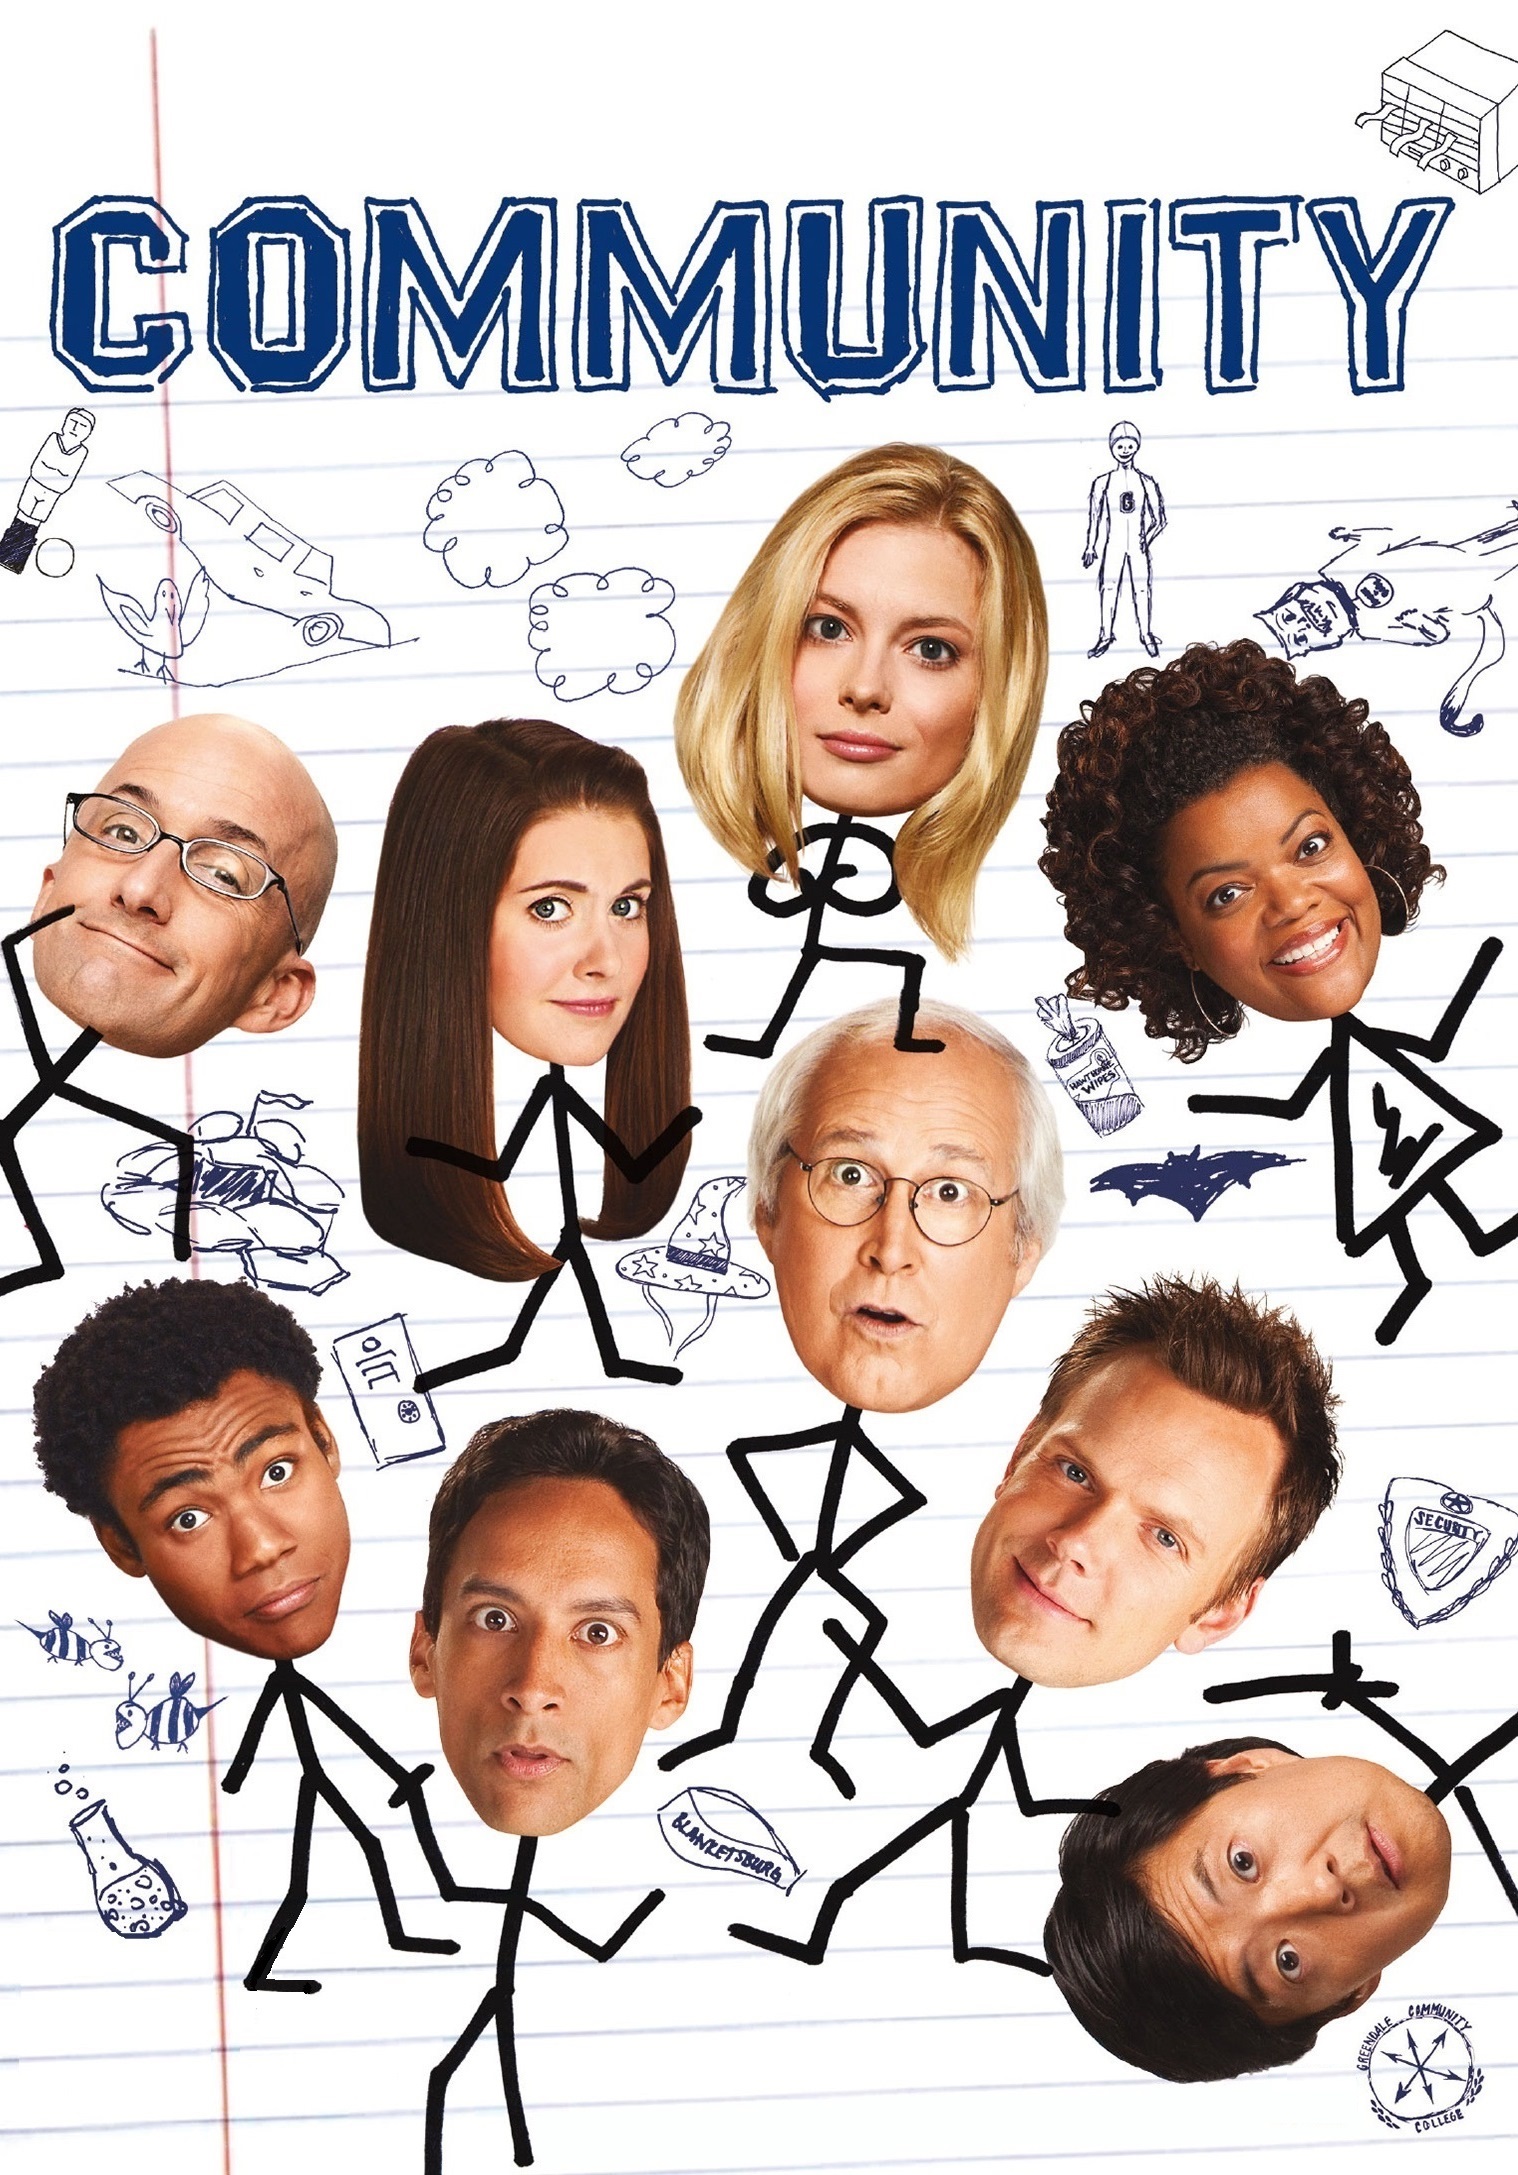 Community comedy web series